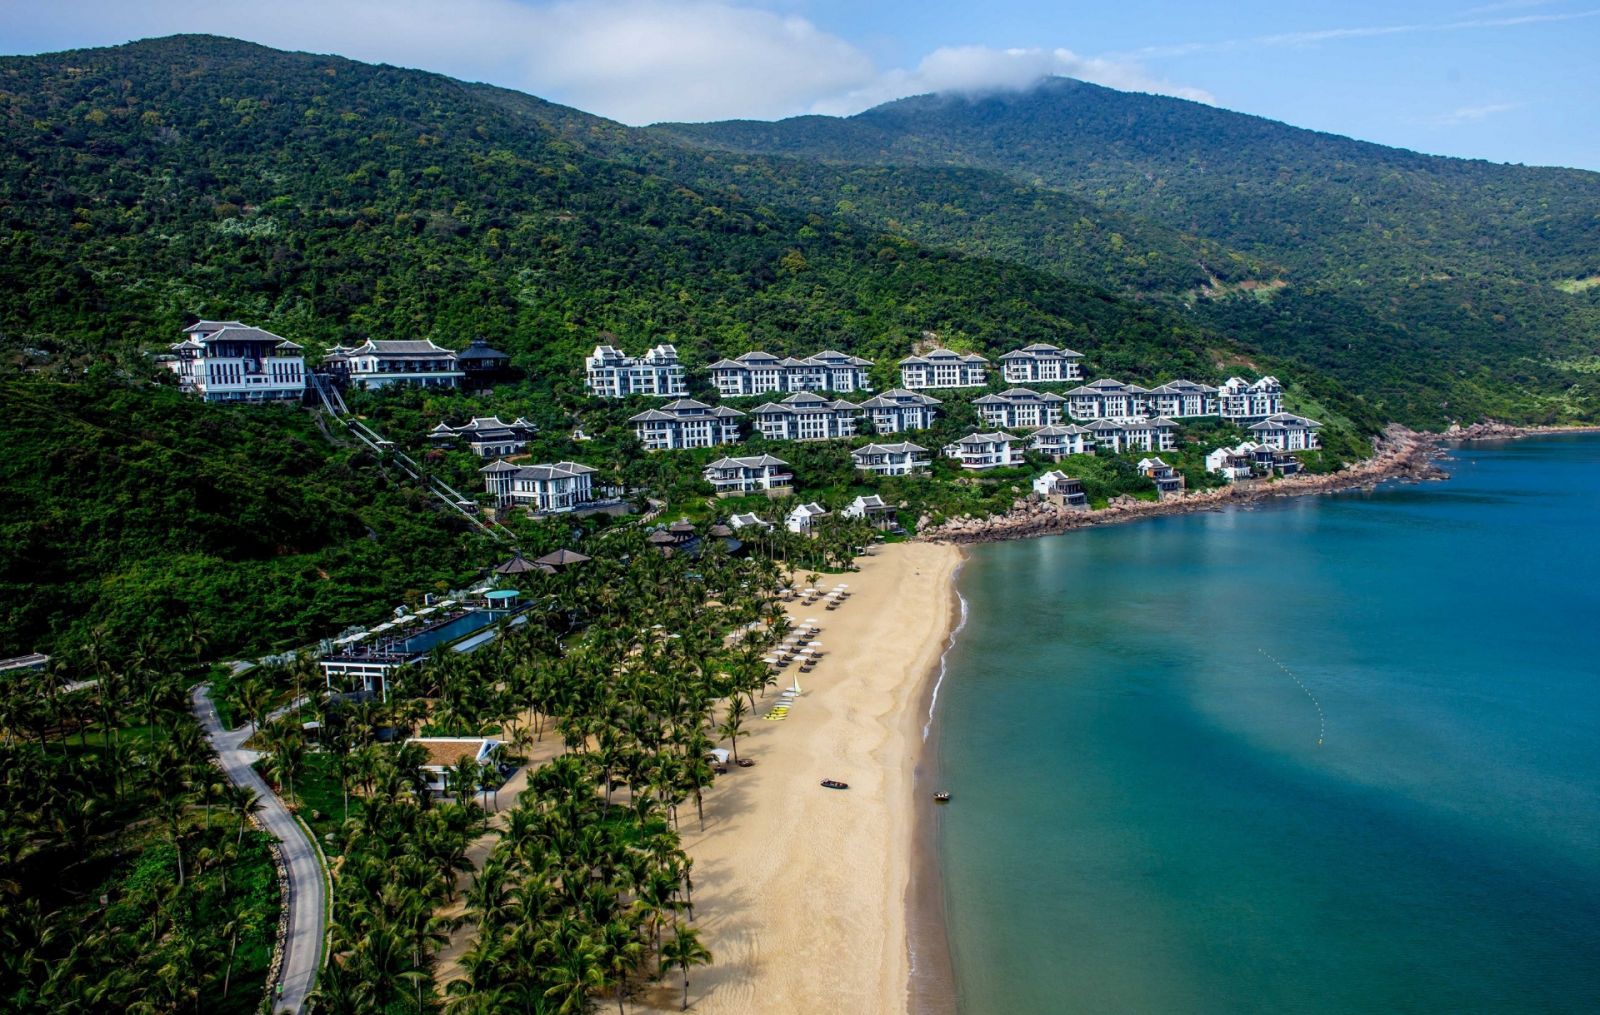 InterContinental Danang Sun Peninsula Resort is an attractive resort in Vietnam and Danang.